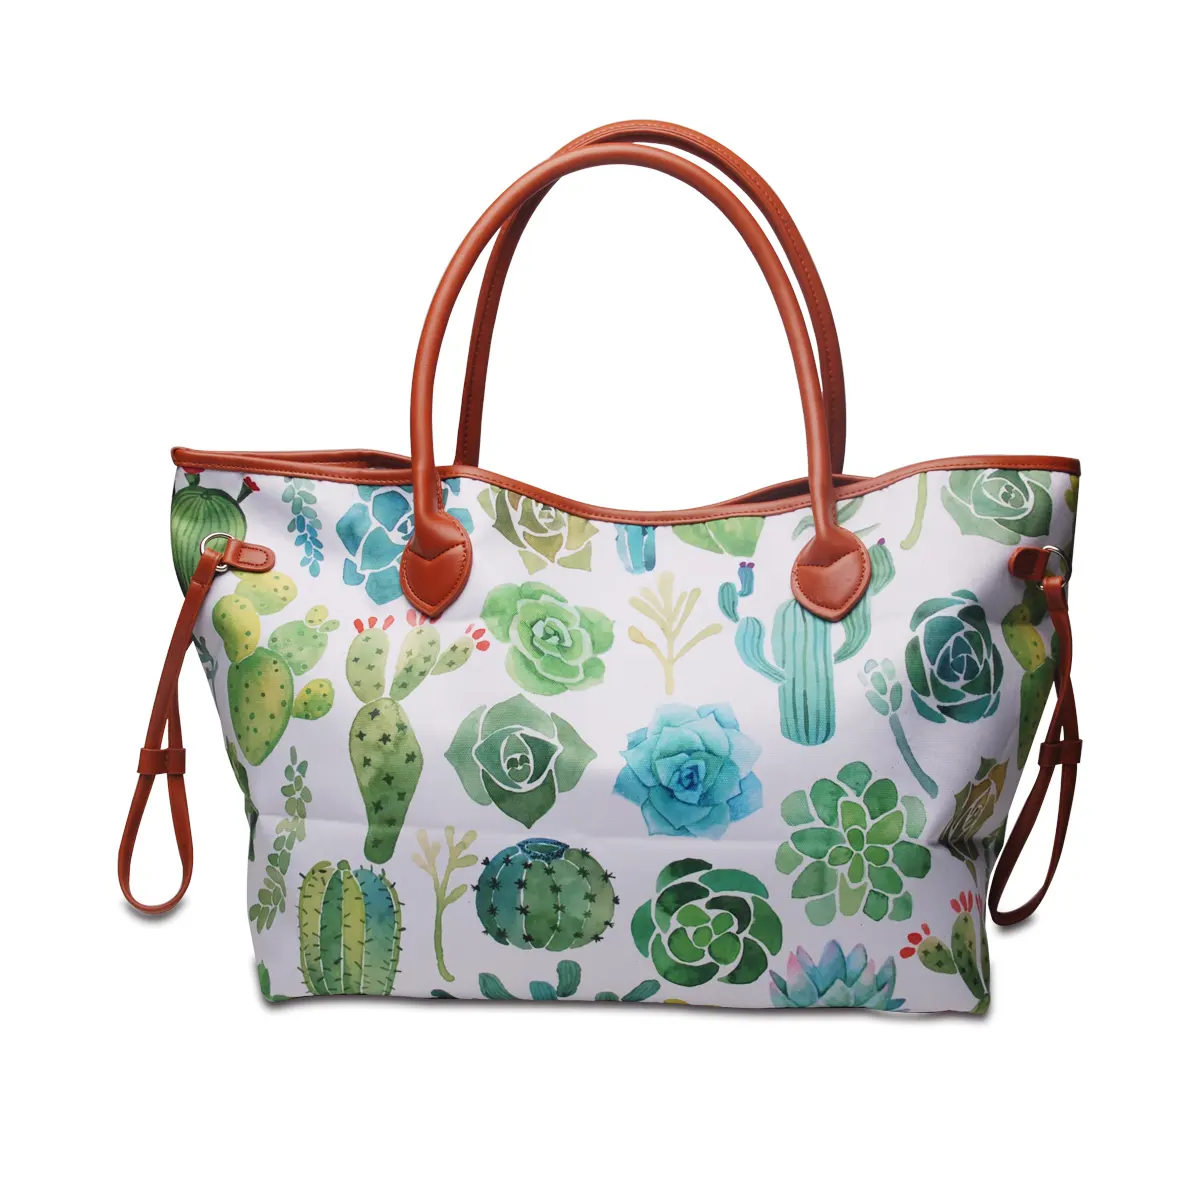 Ready To Ship 50 Pcs Free Shipping Women Canvas Cactus Tote Bag Wholesale Large Size Cactus Travel Shoulder Bag